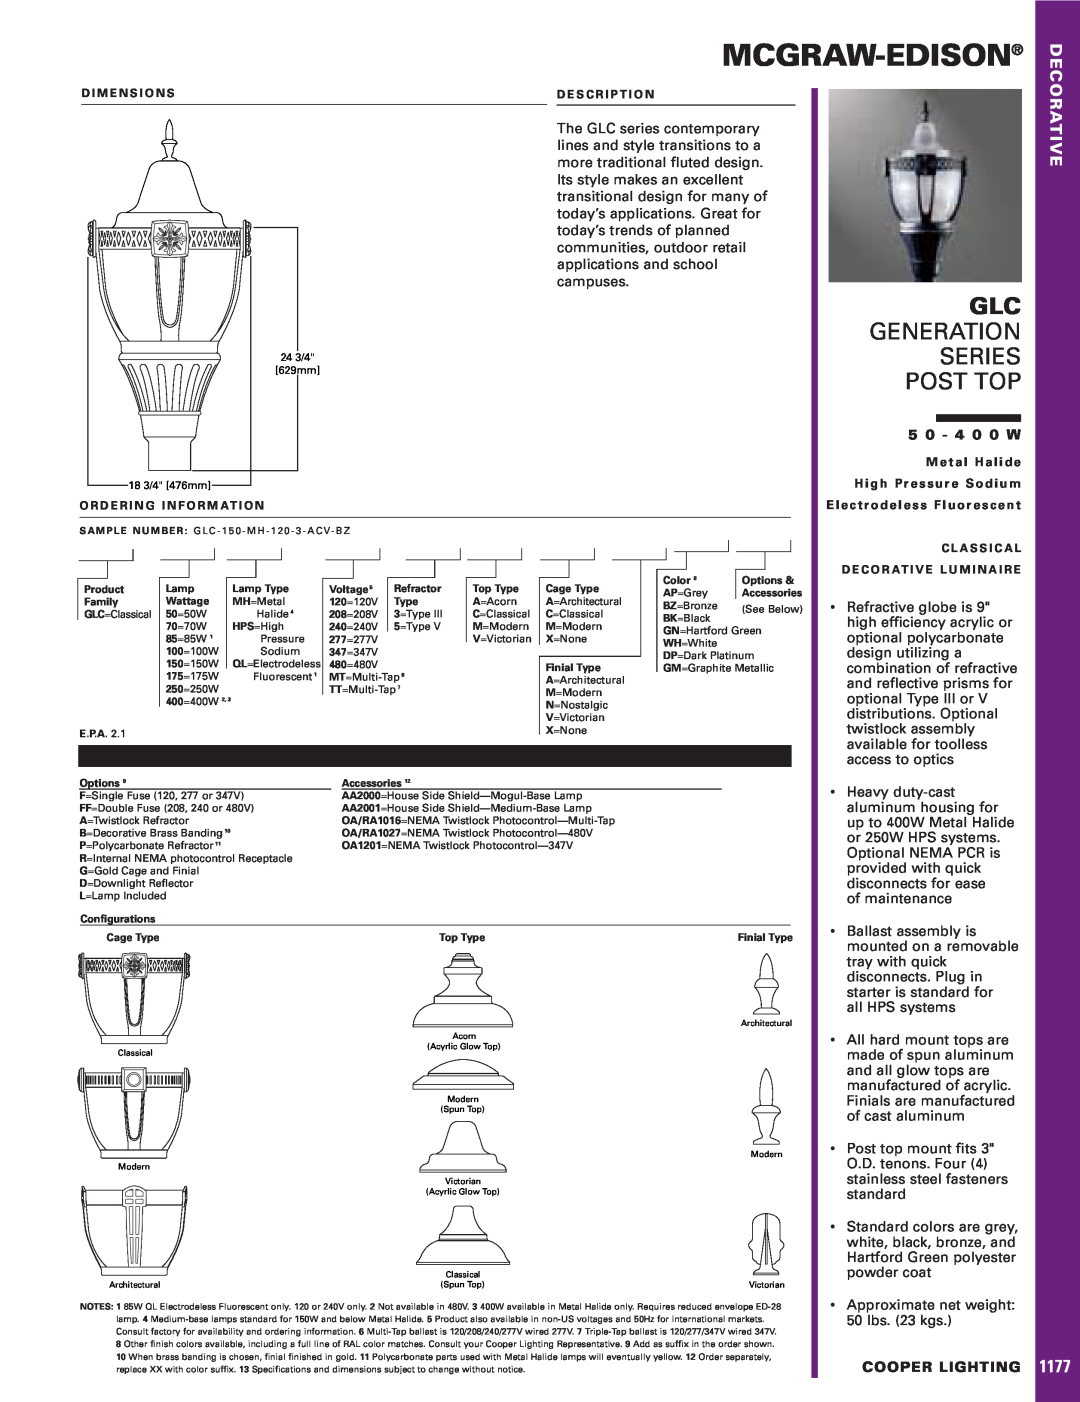 Cooper Lighting 50 - 400W dimensions Mcgraw-Edison, Glc Generation Series Post Top, 1177 